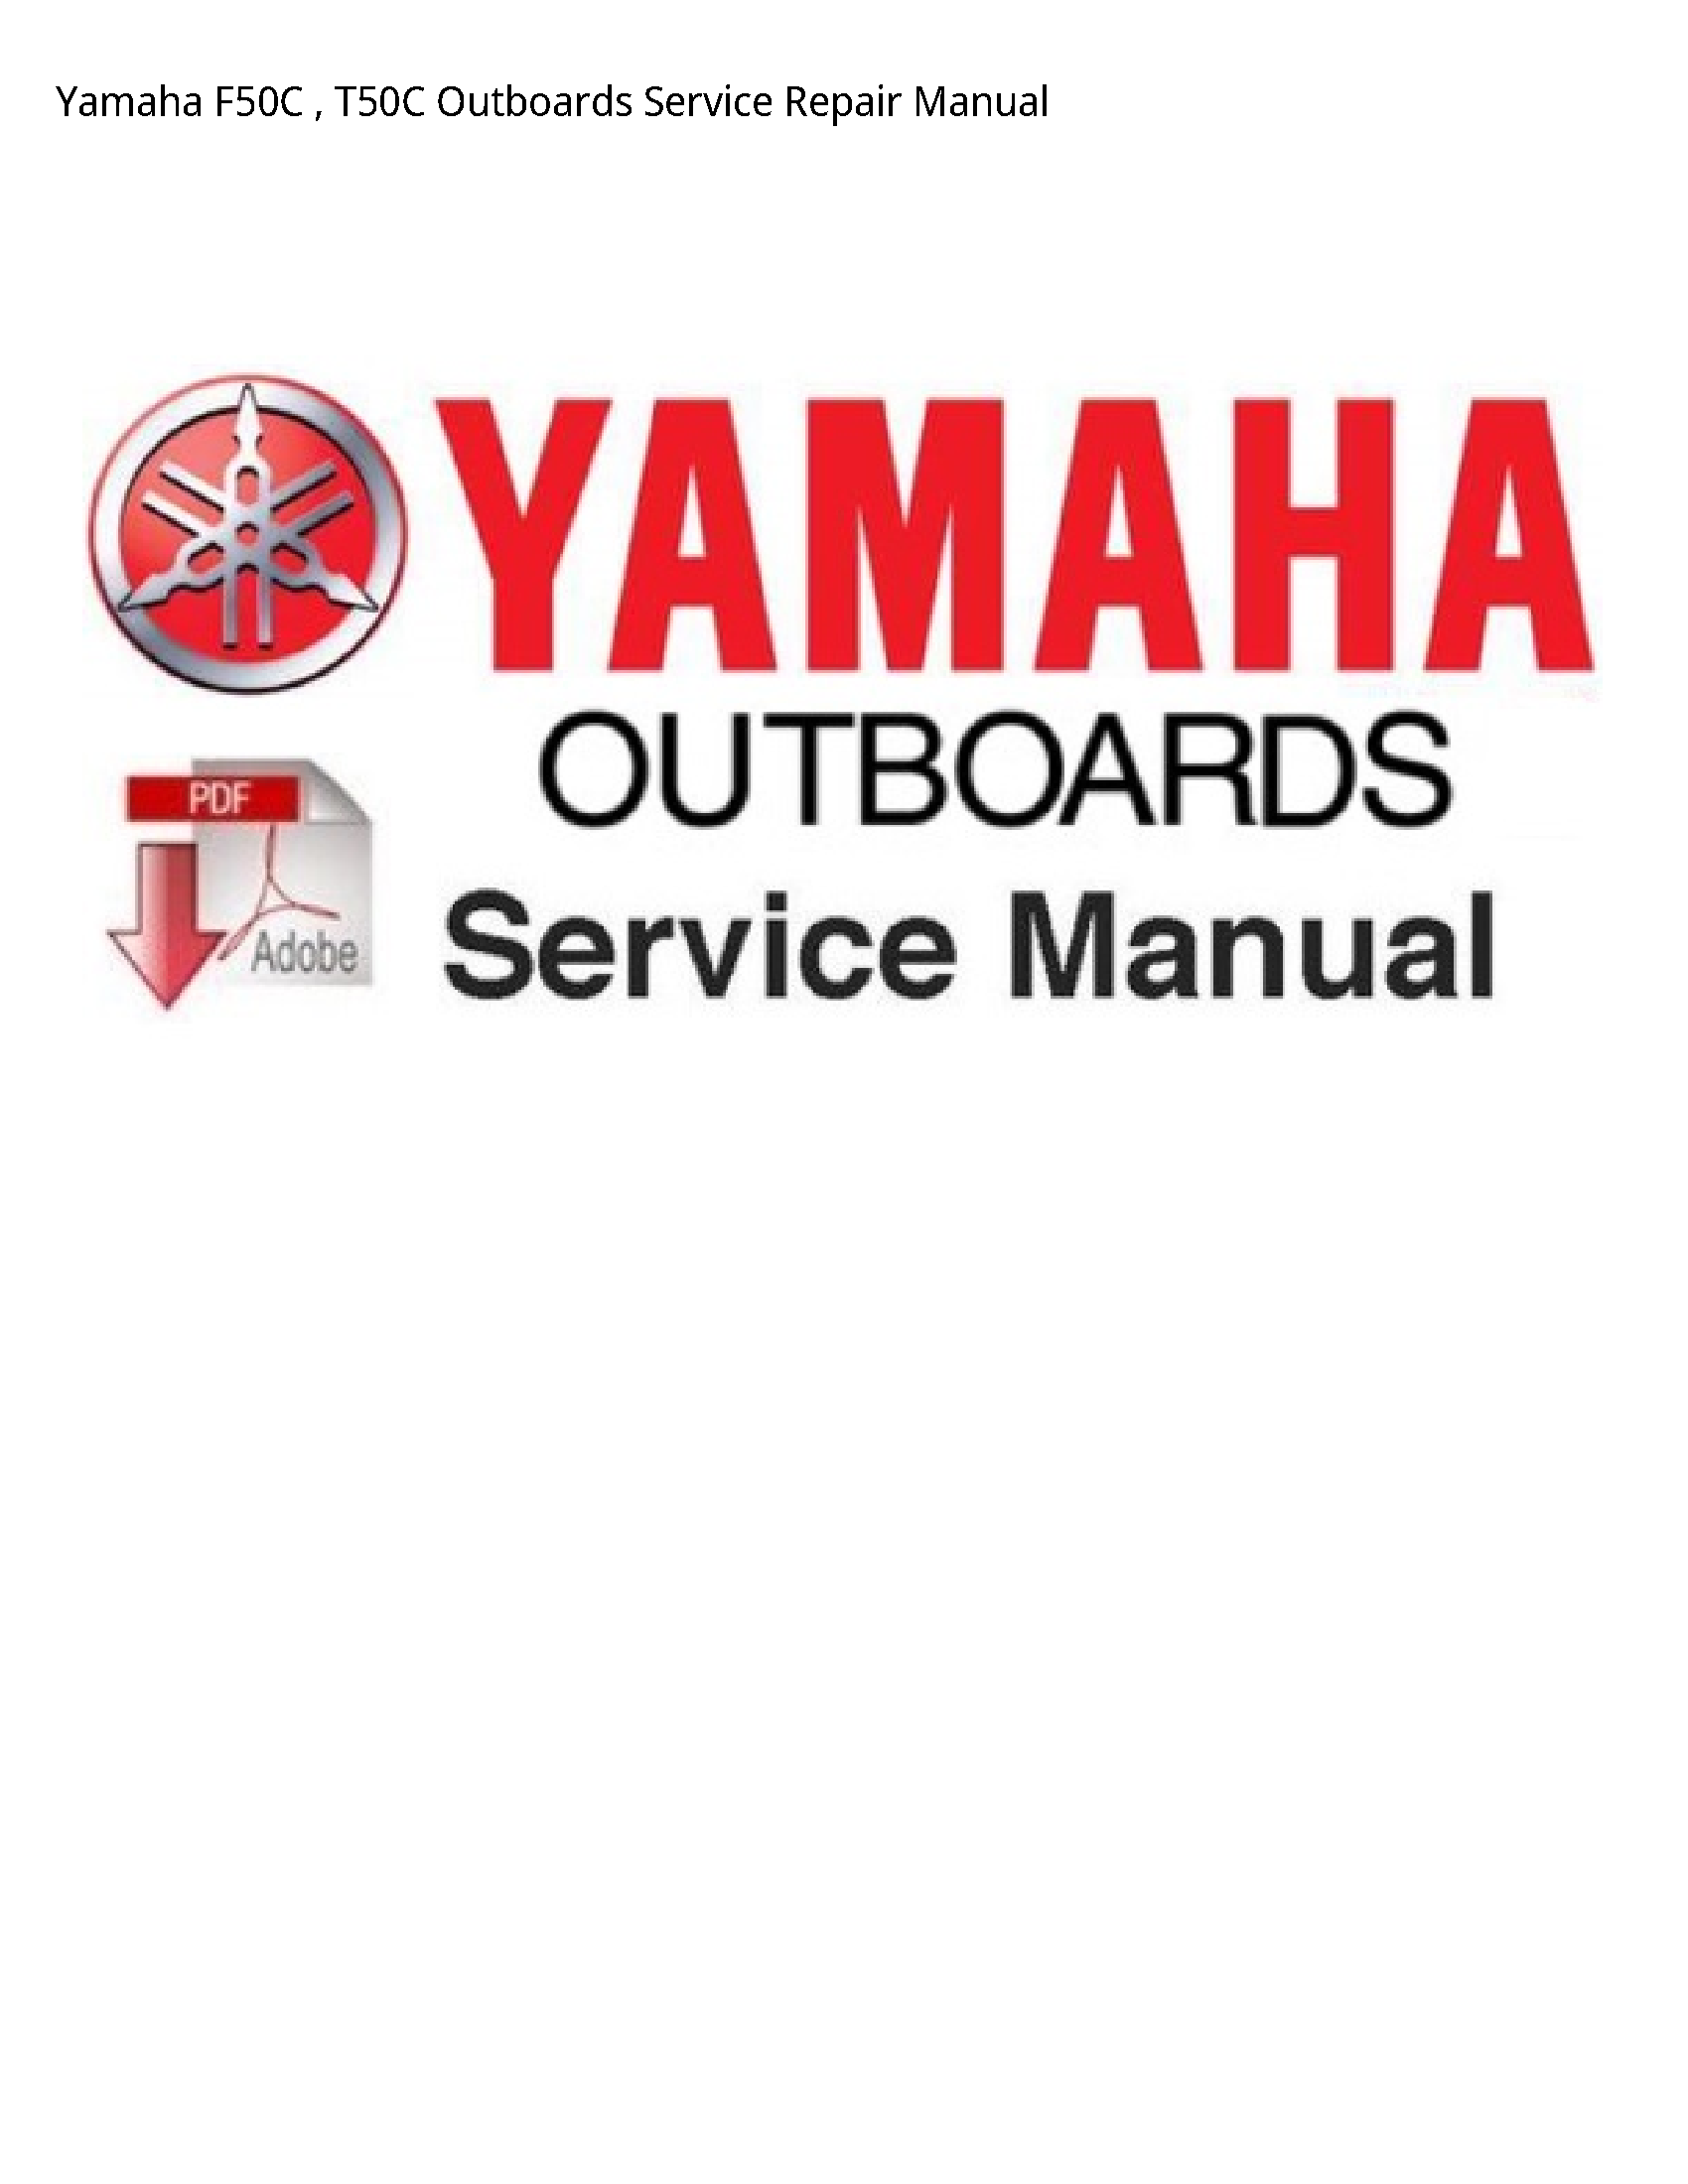 Yamaha F50C Outboards manual